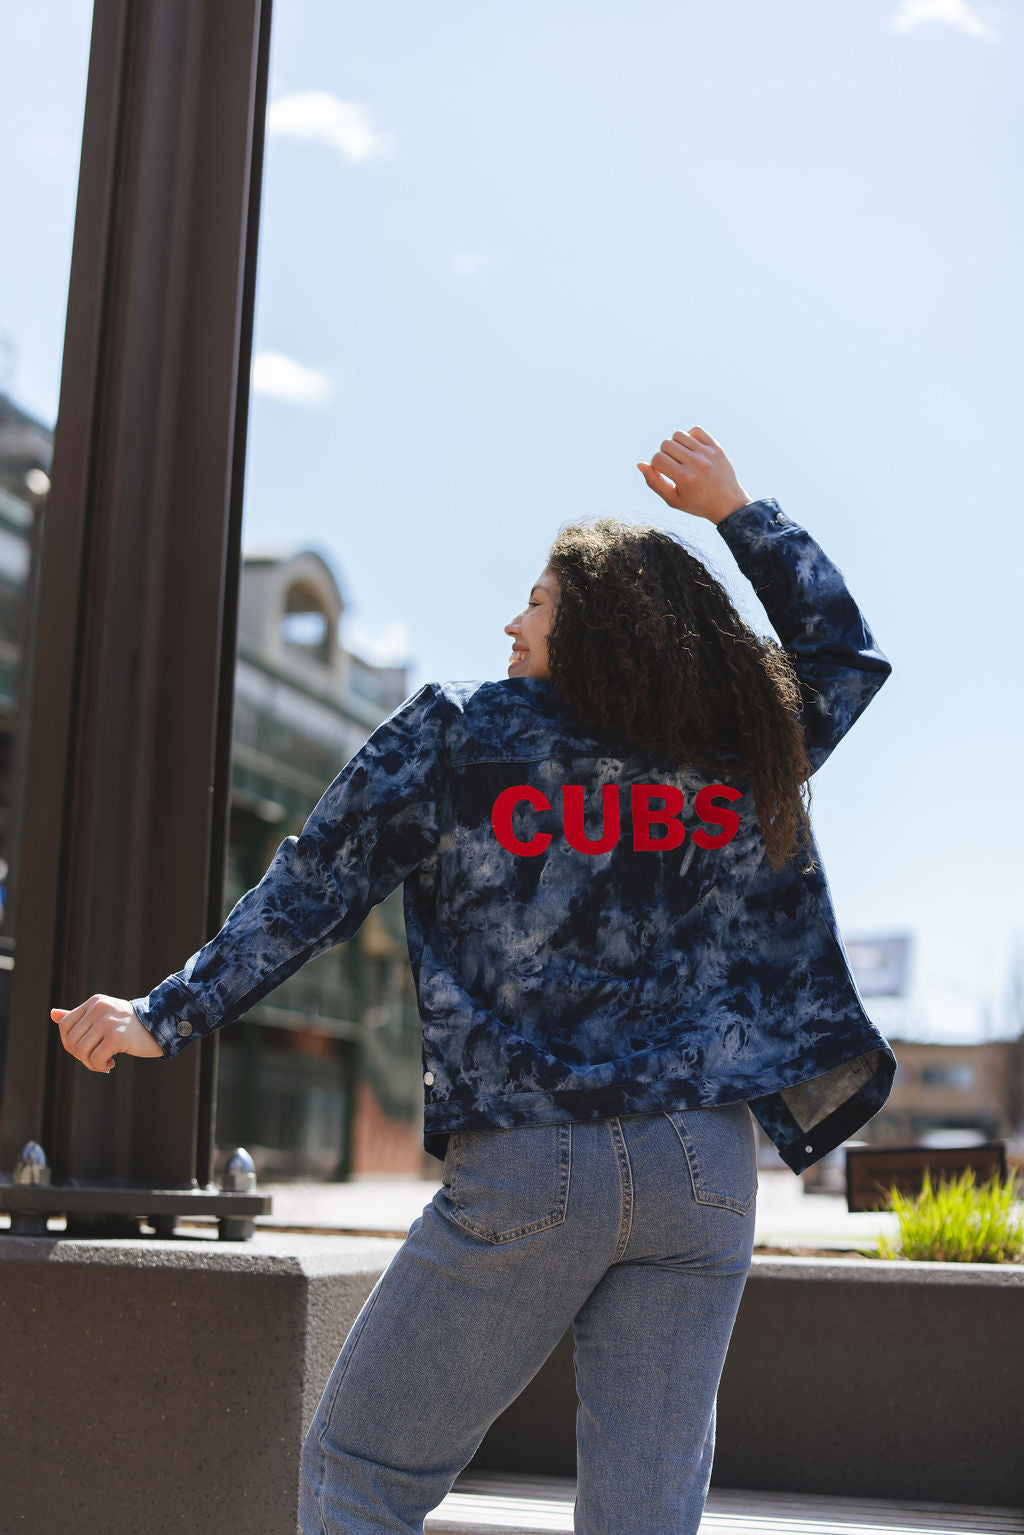 Chicago Cubs Refried Women's Long Sleeve Jersey Tee XL